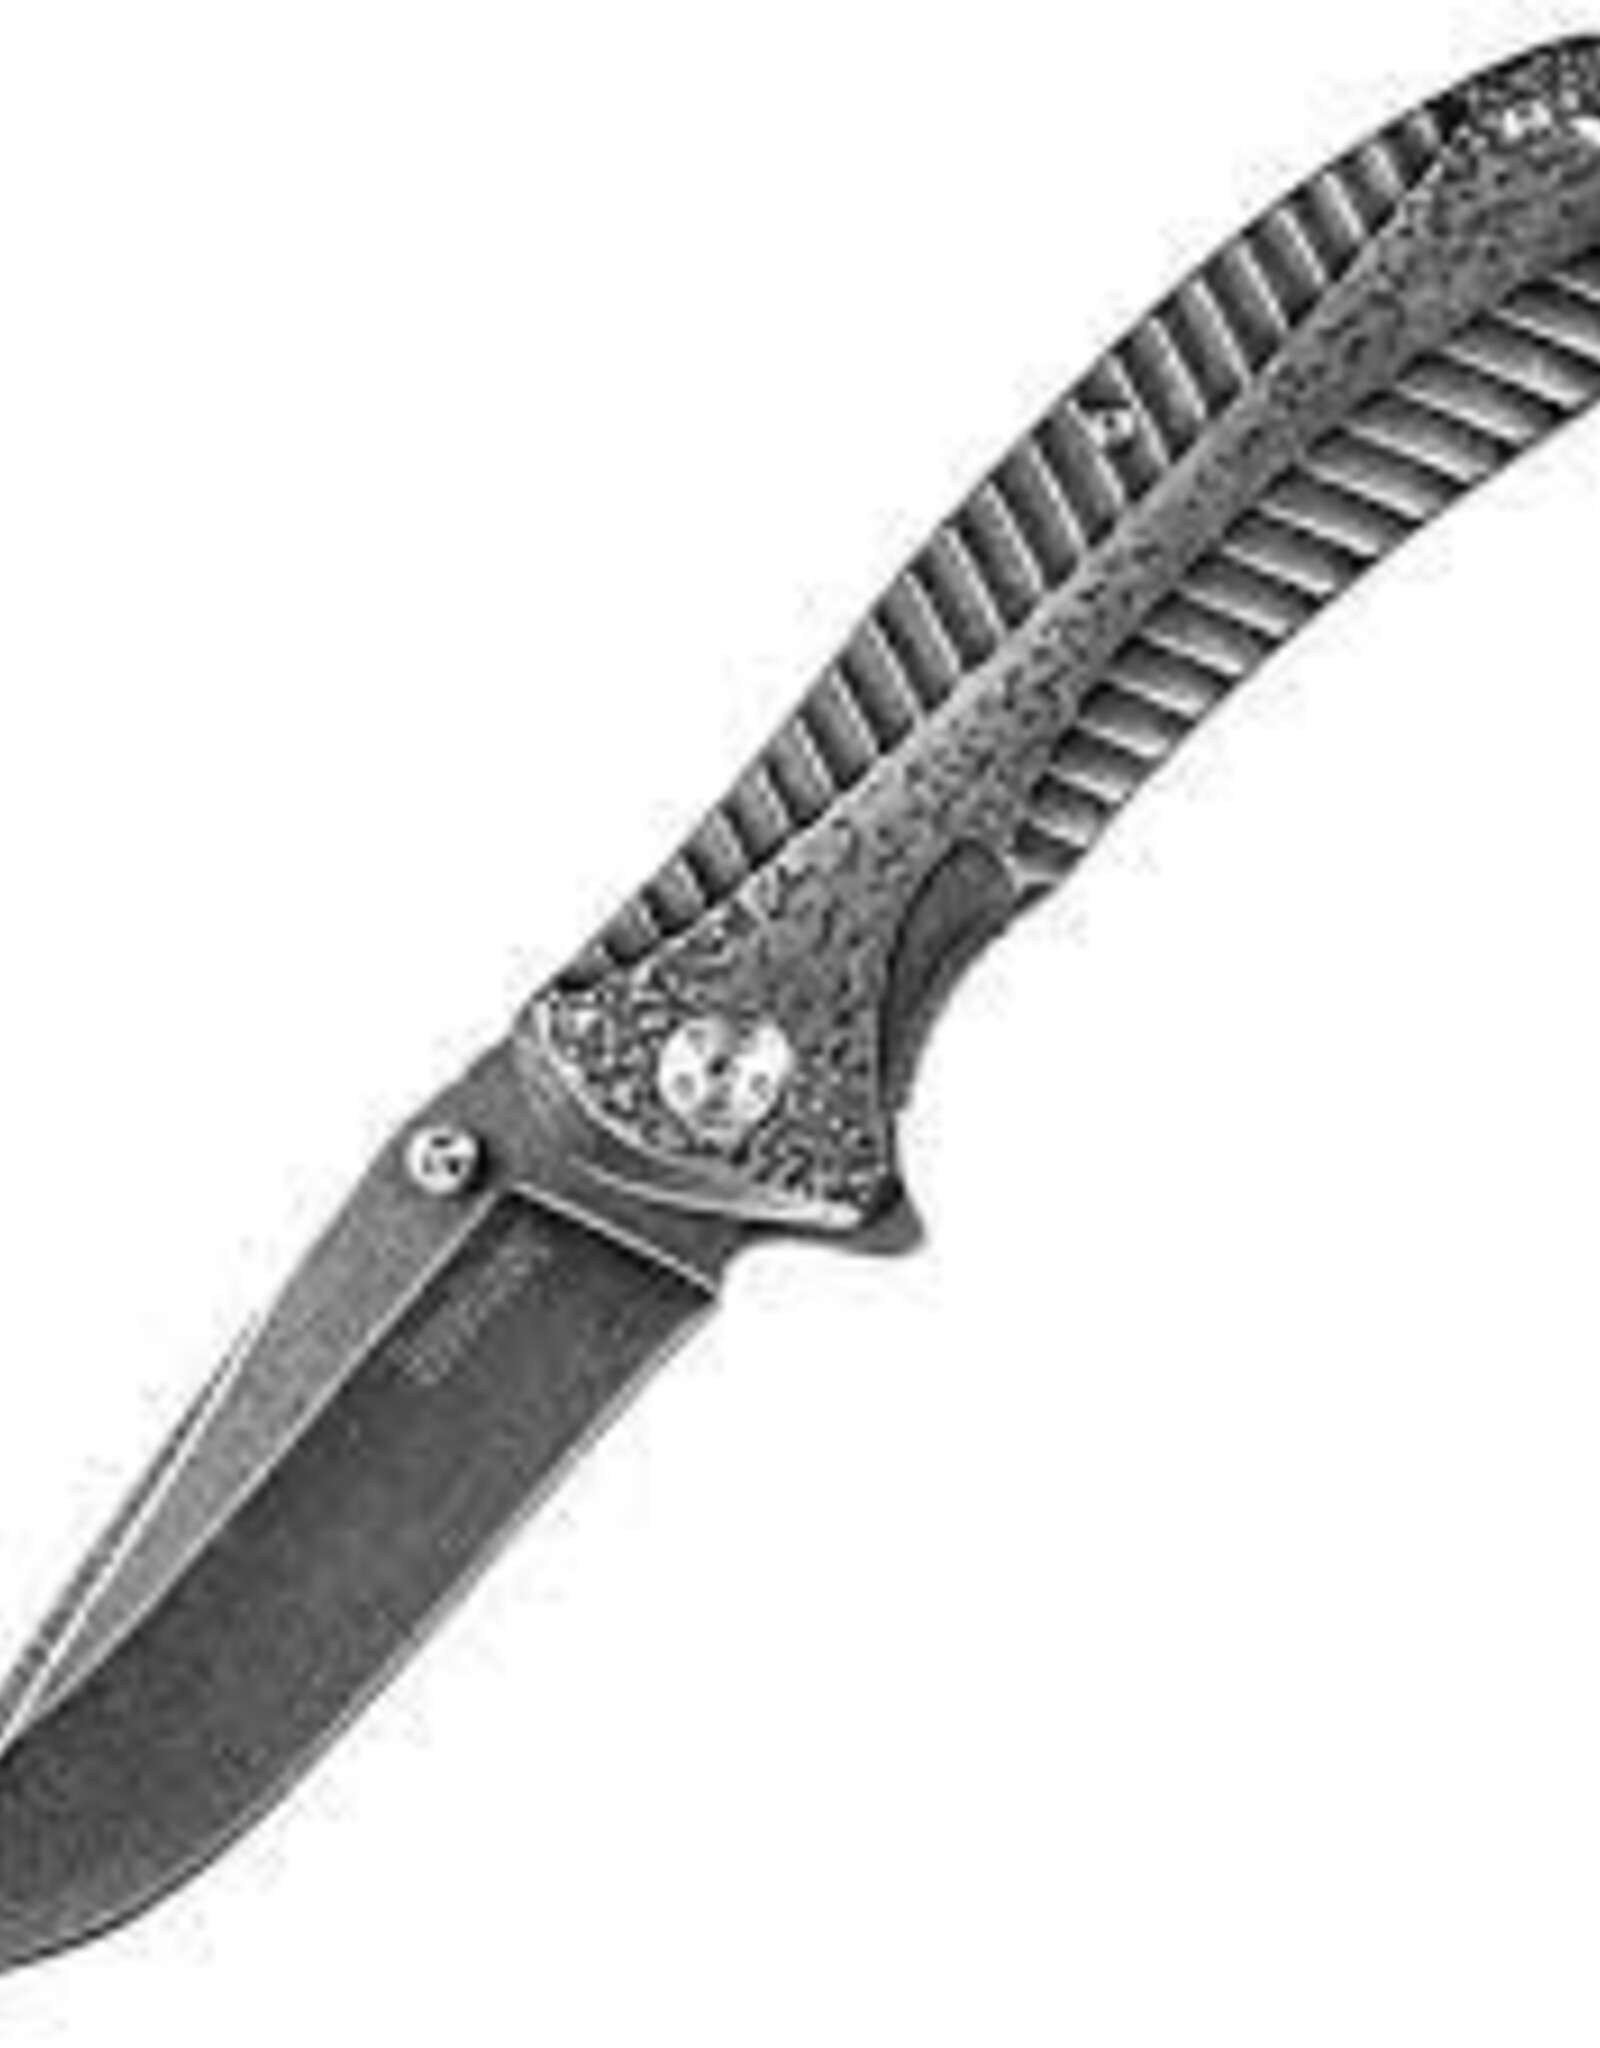 Kershaw Starter Folding Knife